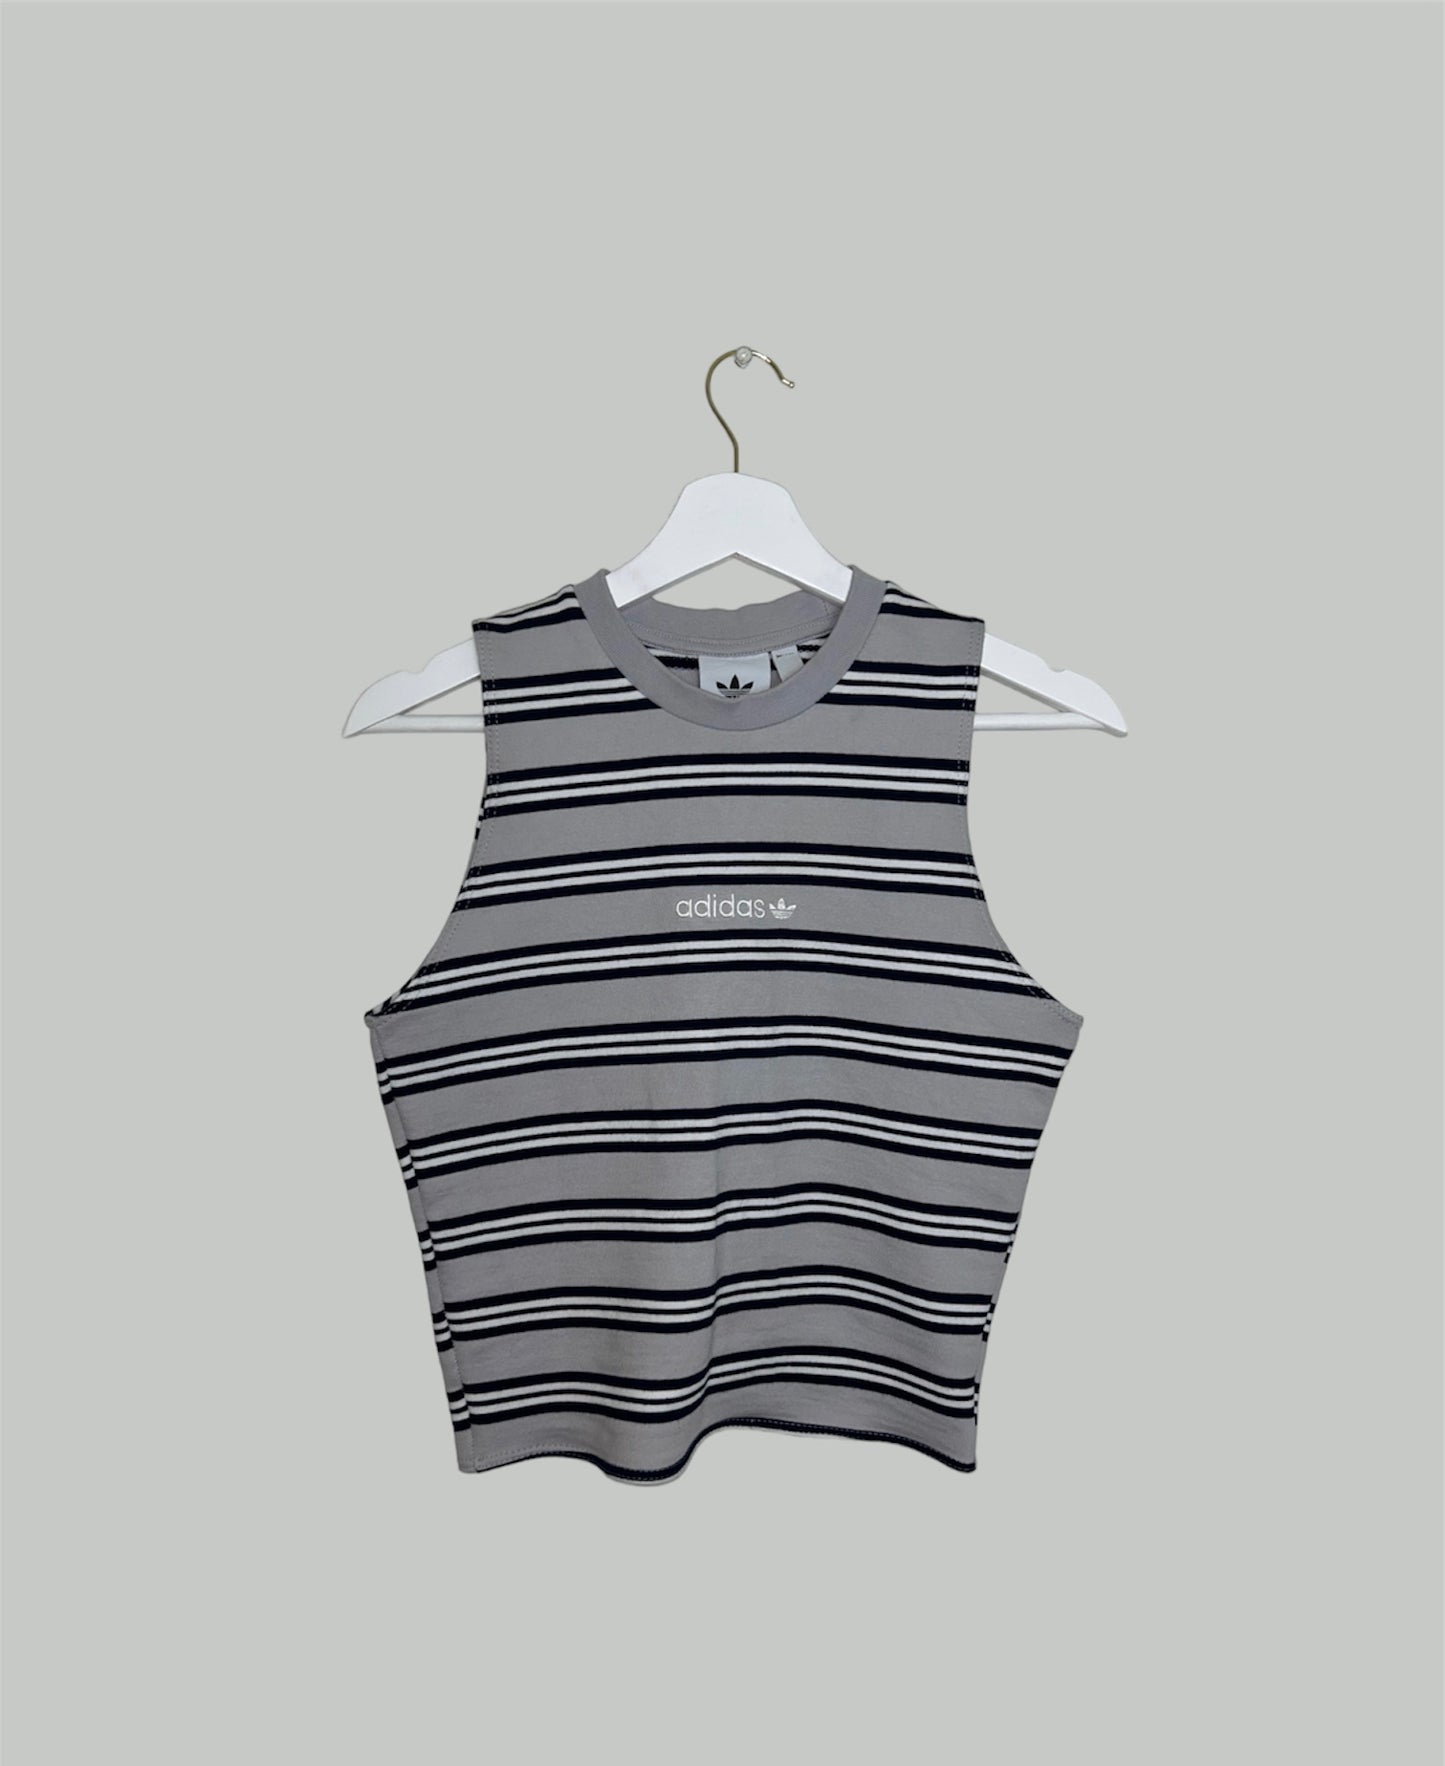 grey stripe sleeveless crop top with white adidas logo